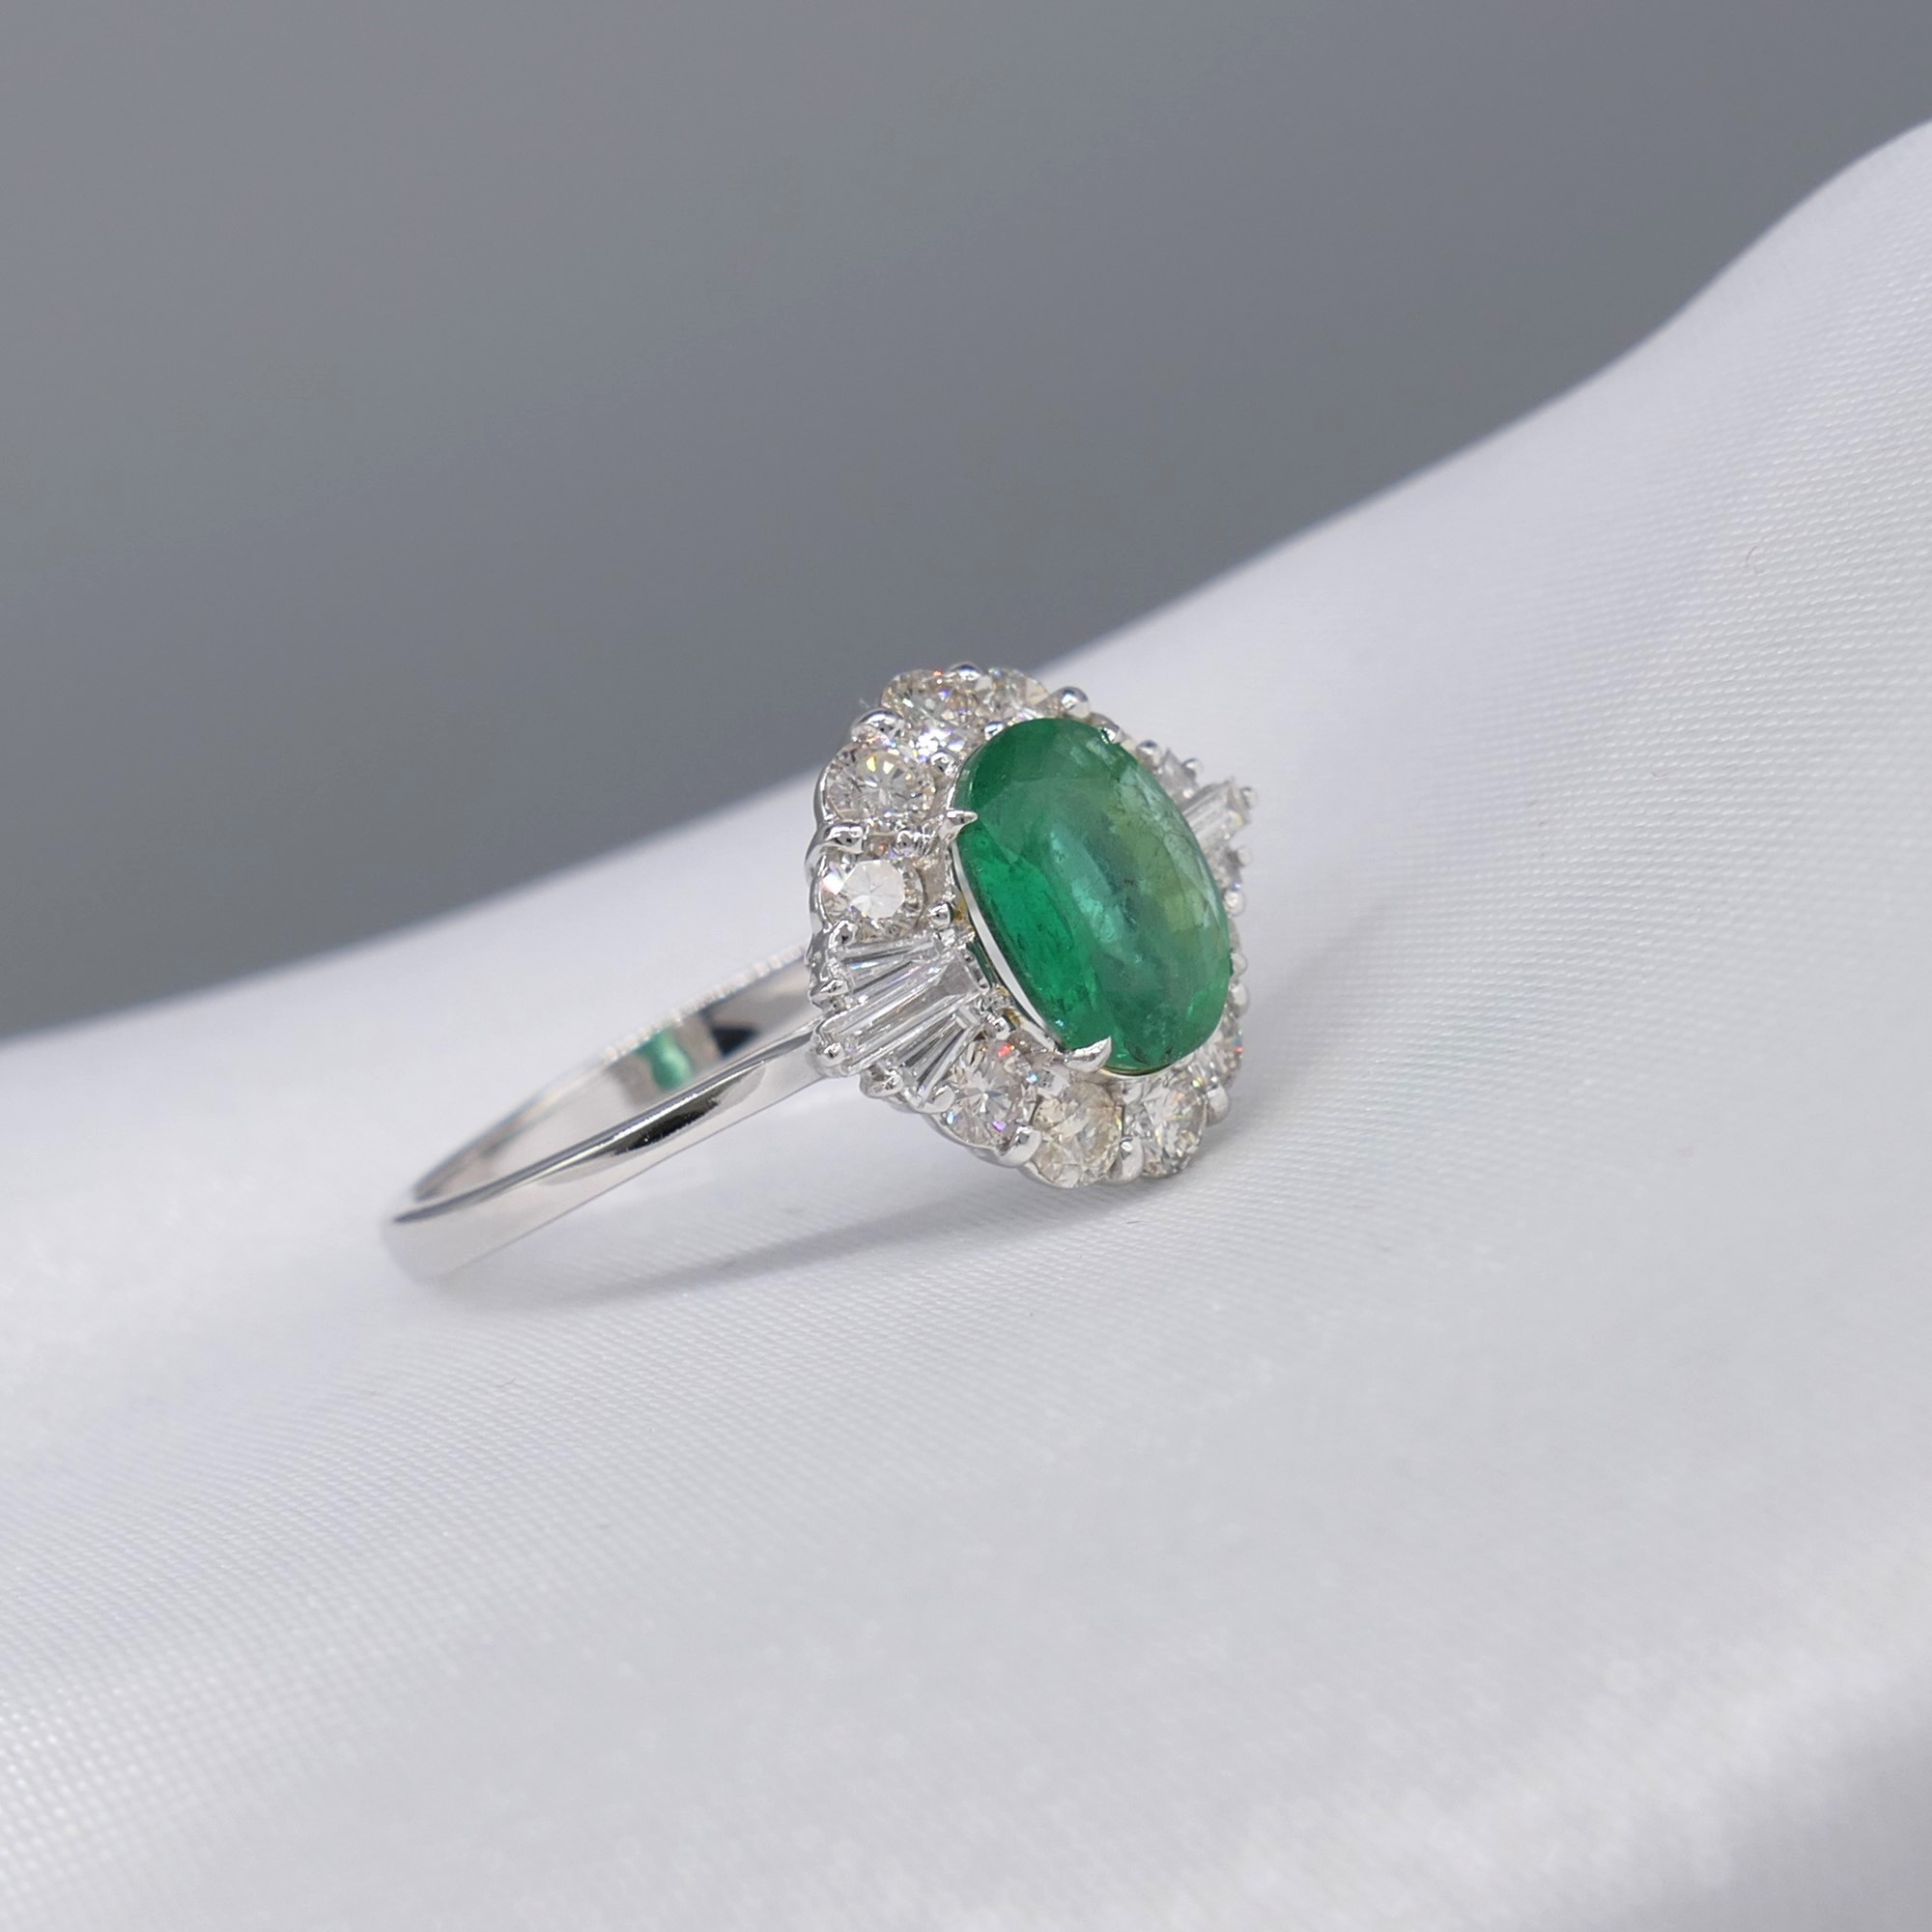 Stylish 1.05 carat emerald and diamond dress ring - Image 6 of 8